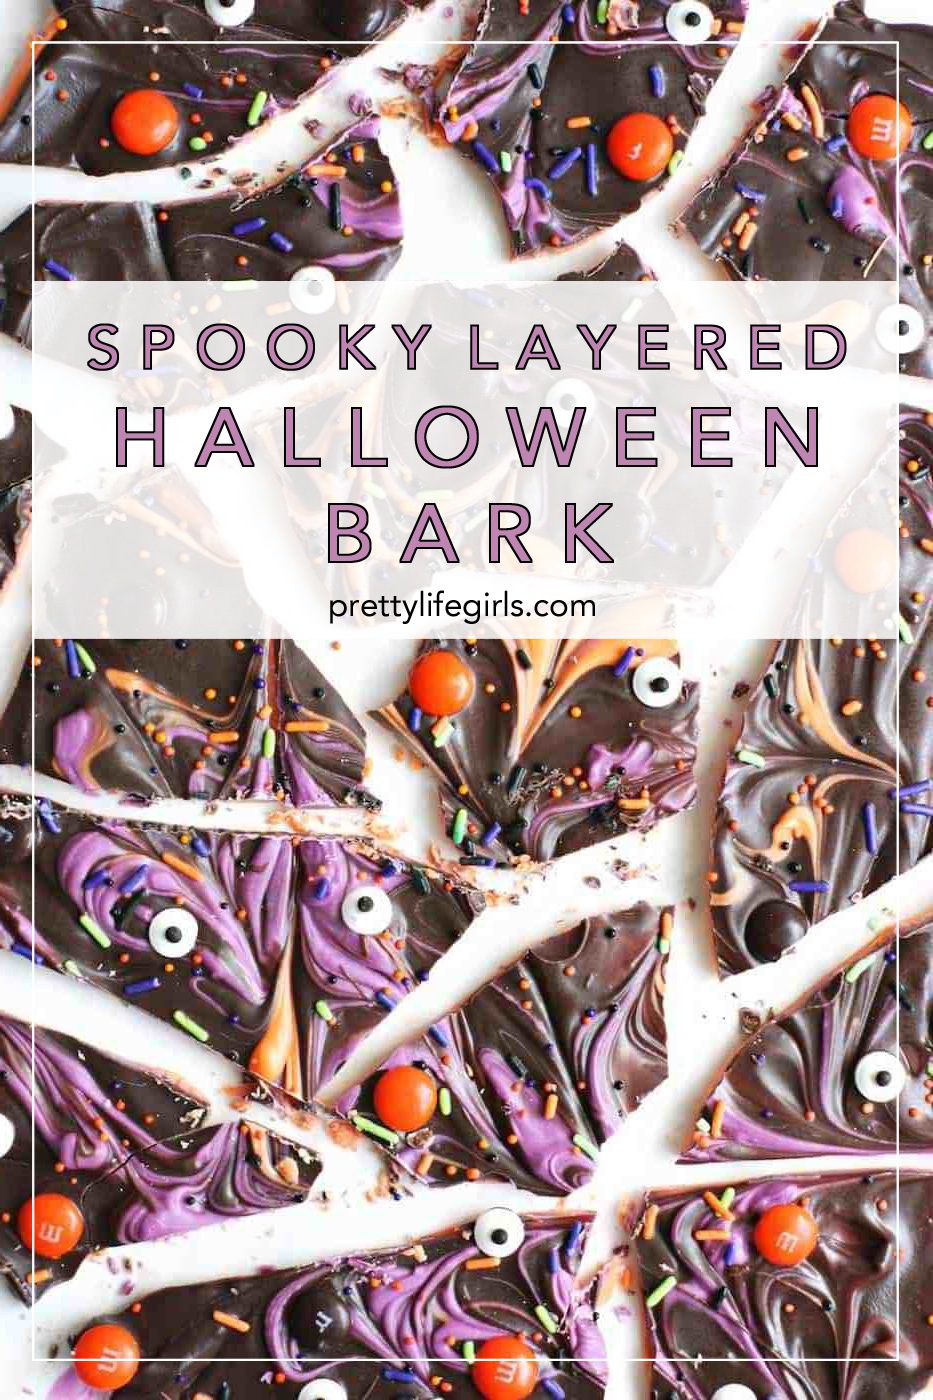 Spooky Layered Halloween Bark | The Pretty Life Girls